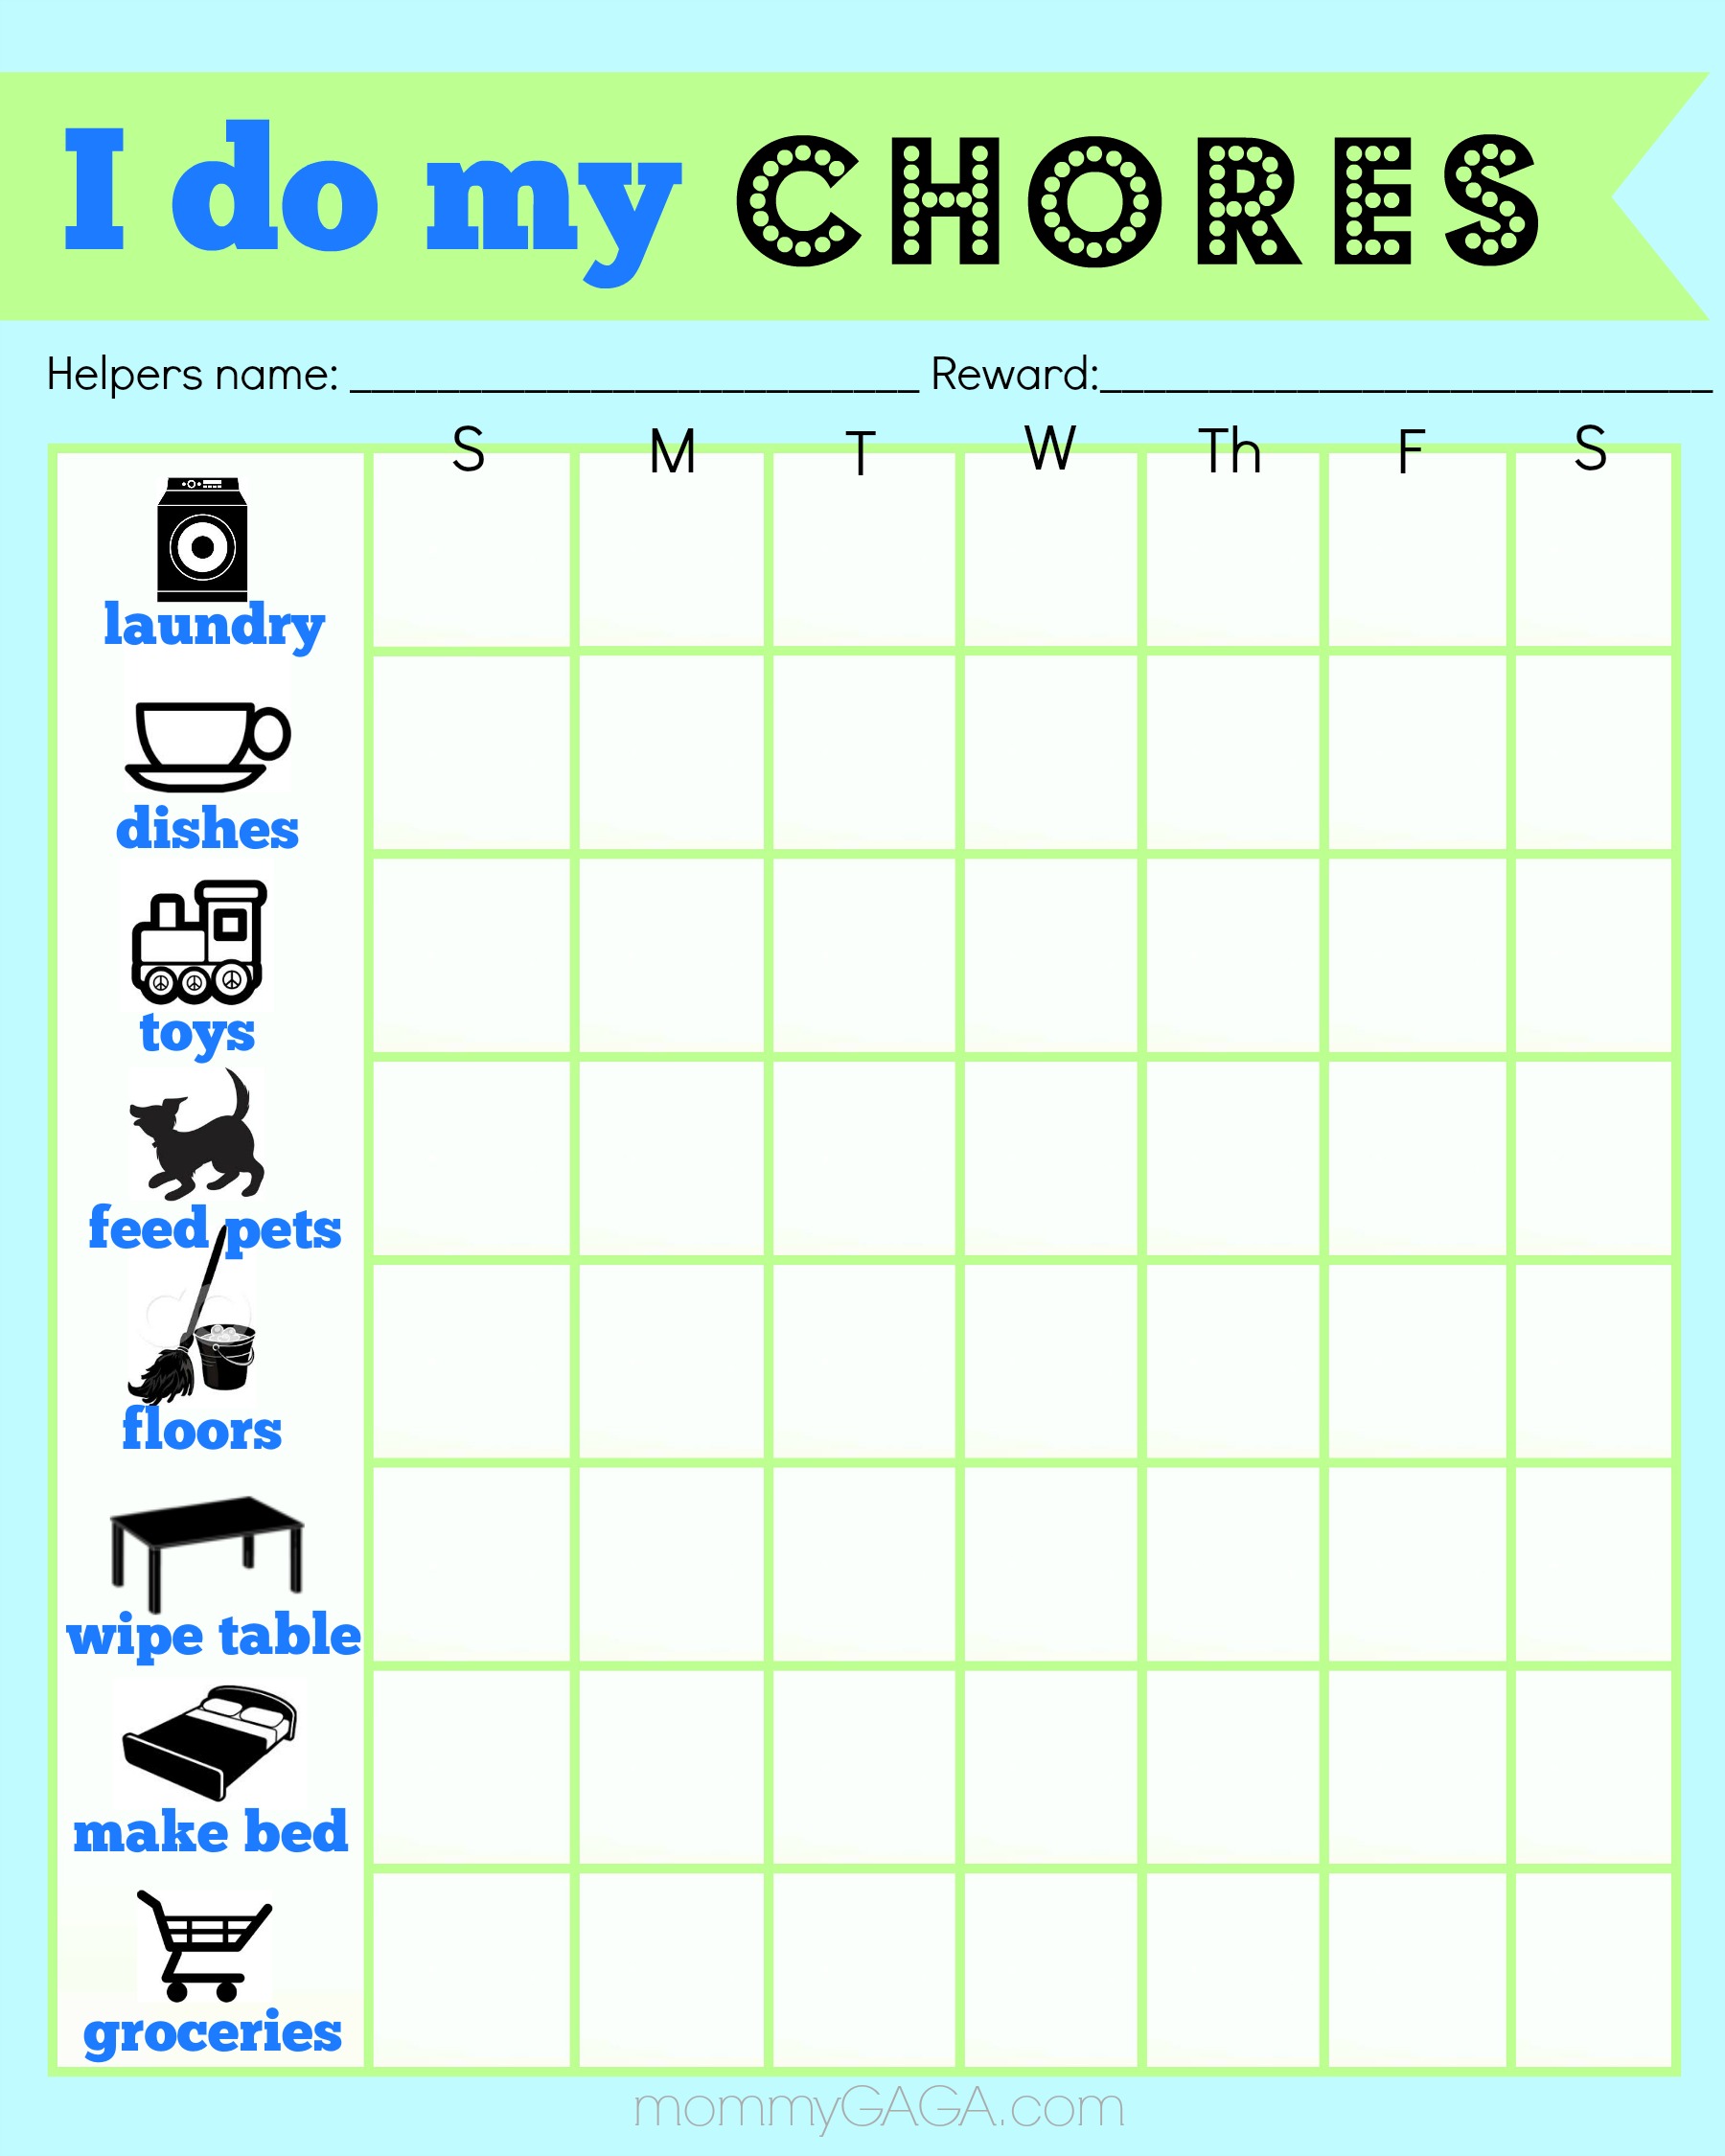 10 Chores For Preschoolers   A Printable Chore Chart